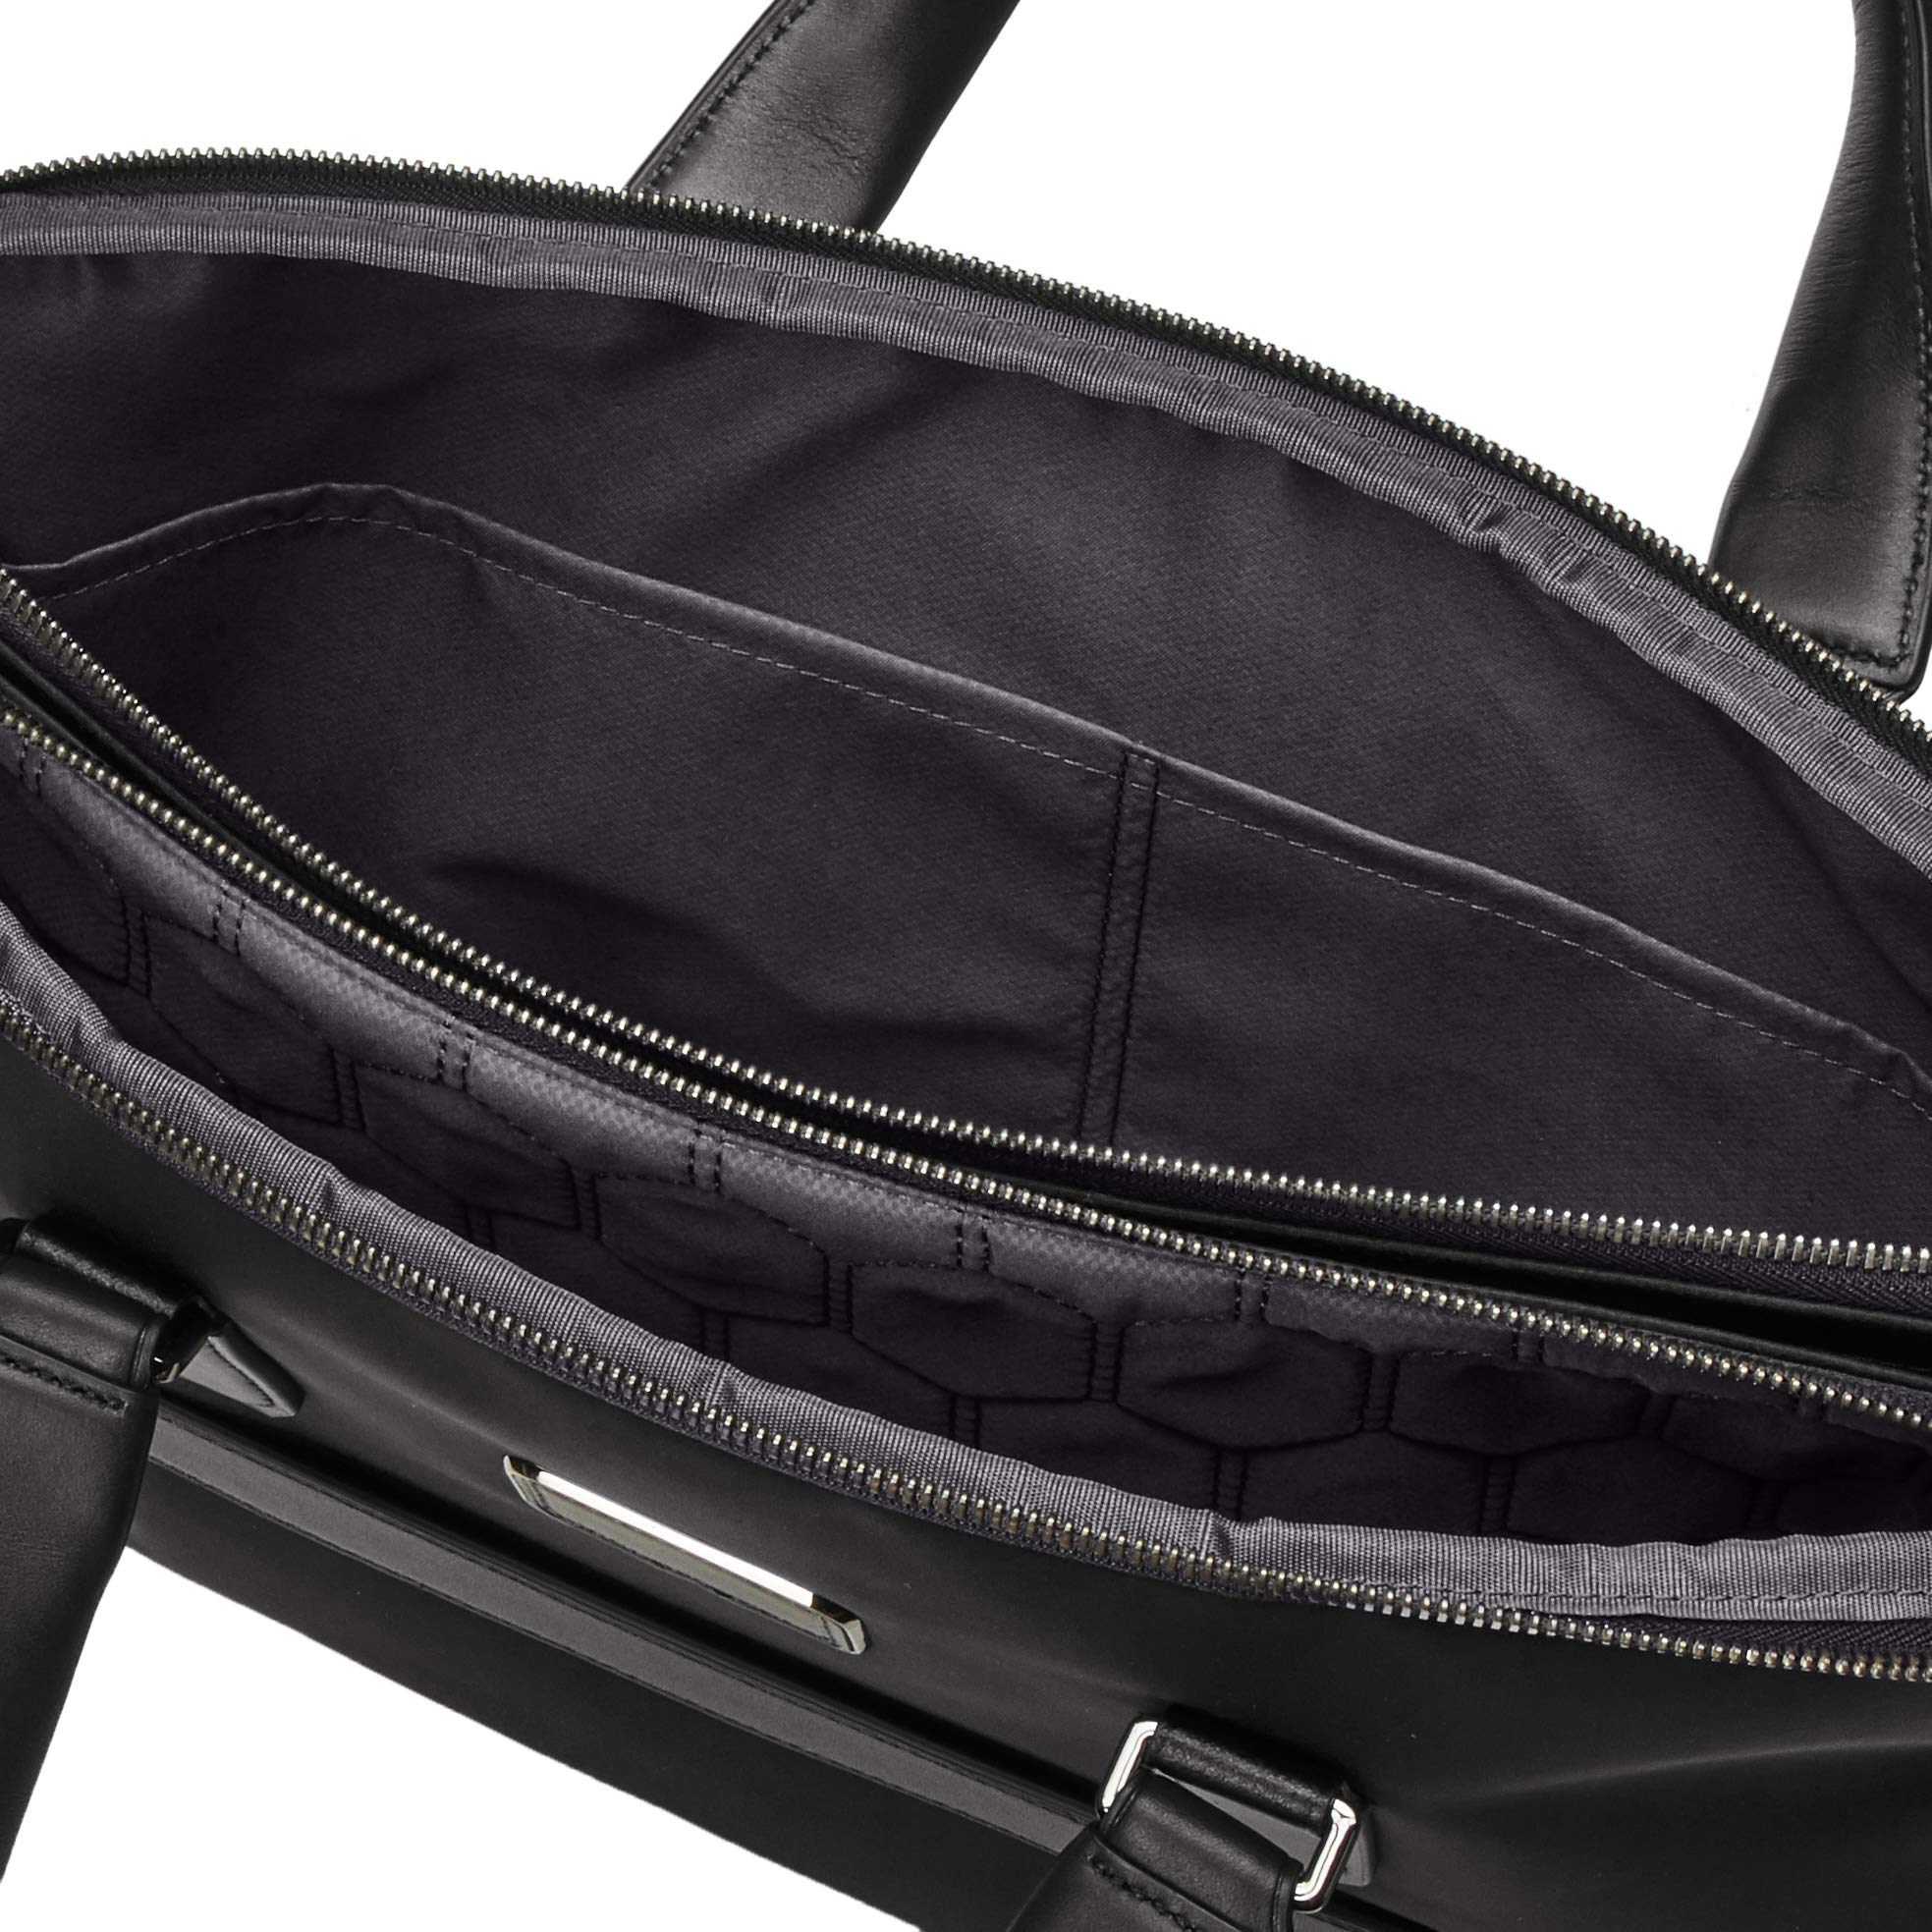 TUMI - Harrison Sycamore Slim Top Zip Briefcase - 15 Inch Computer Bag for Women